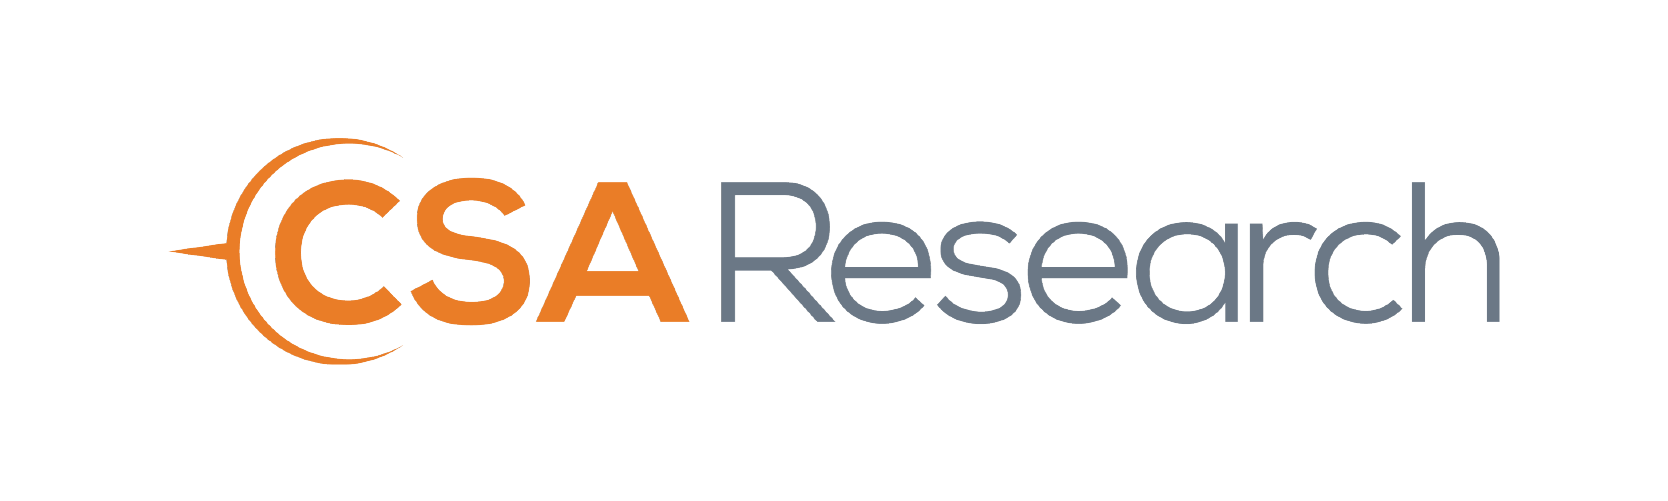 csa_research-1